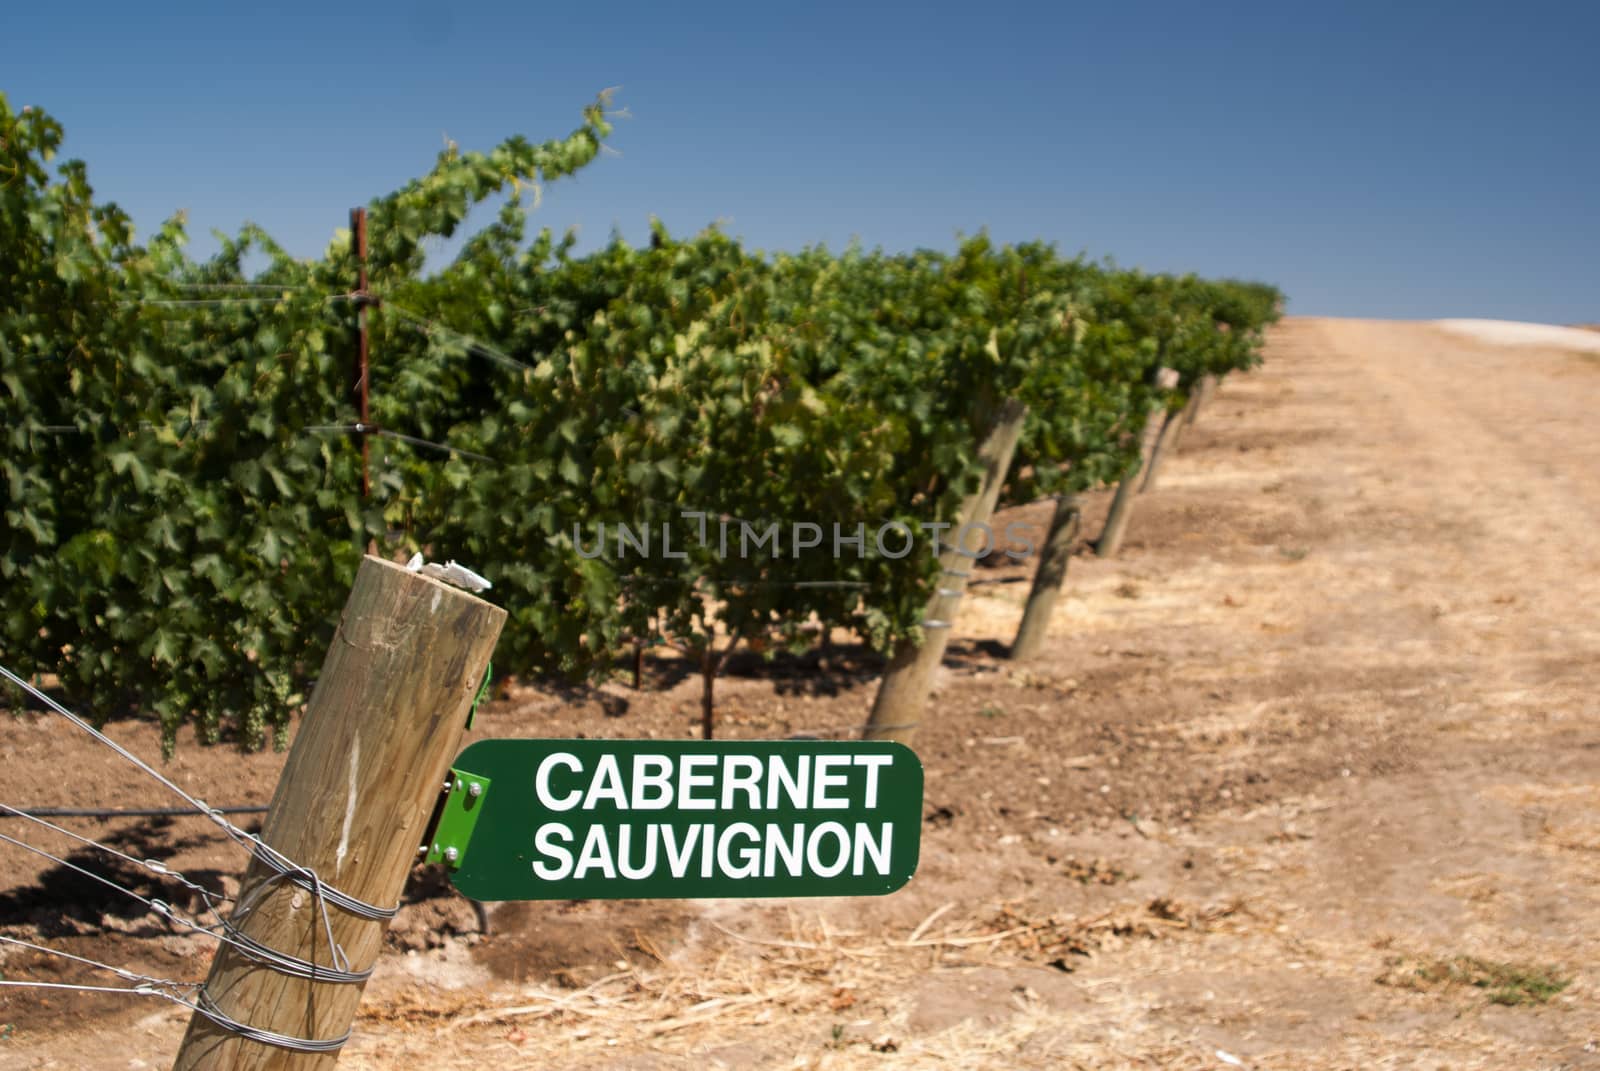 Cabernet Sauvignon sign in dusty California vineyard